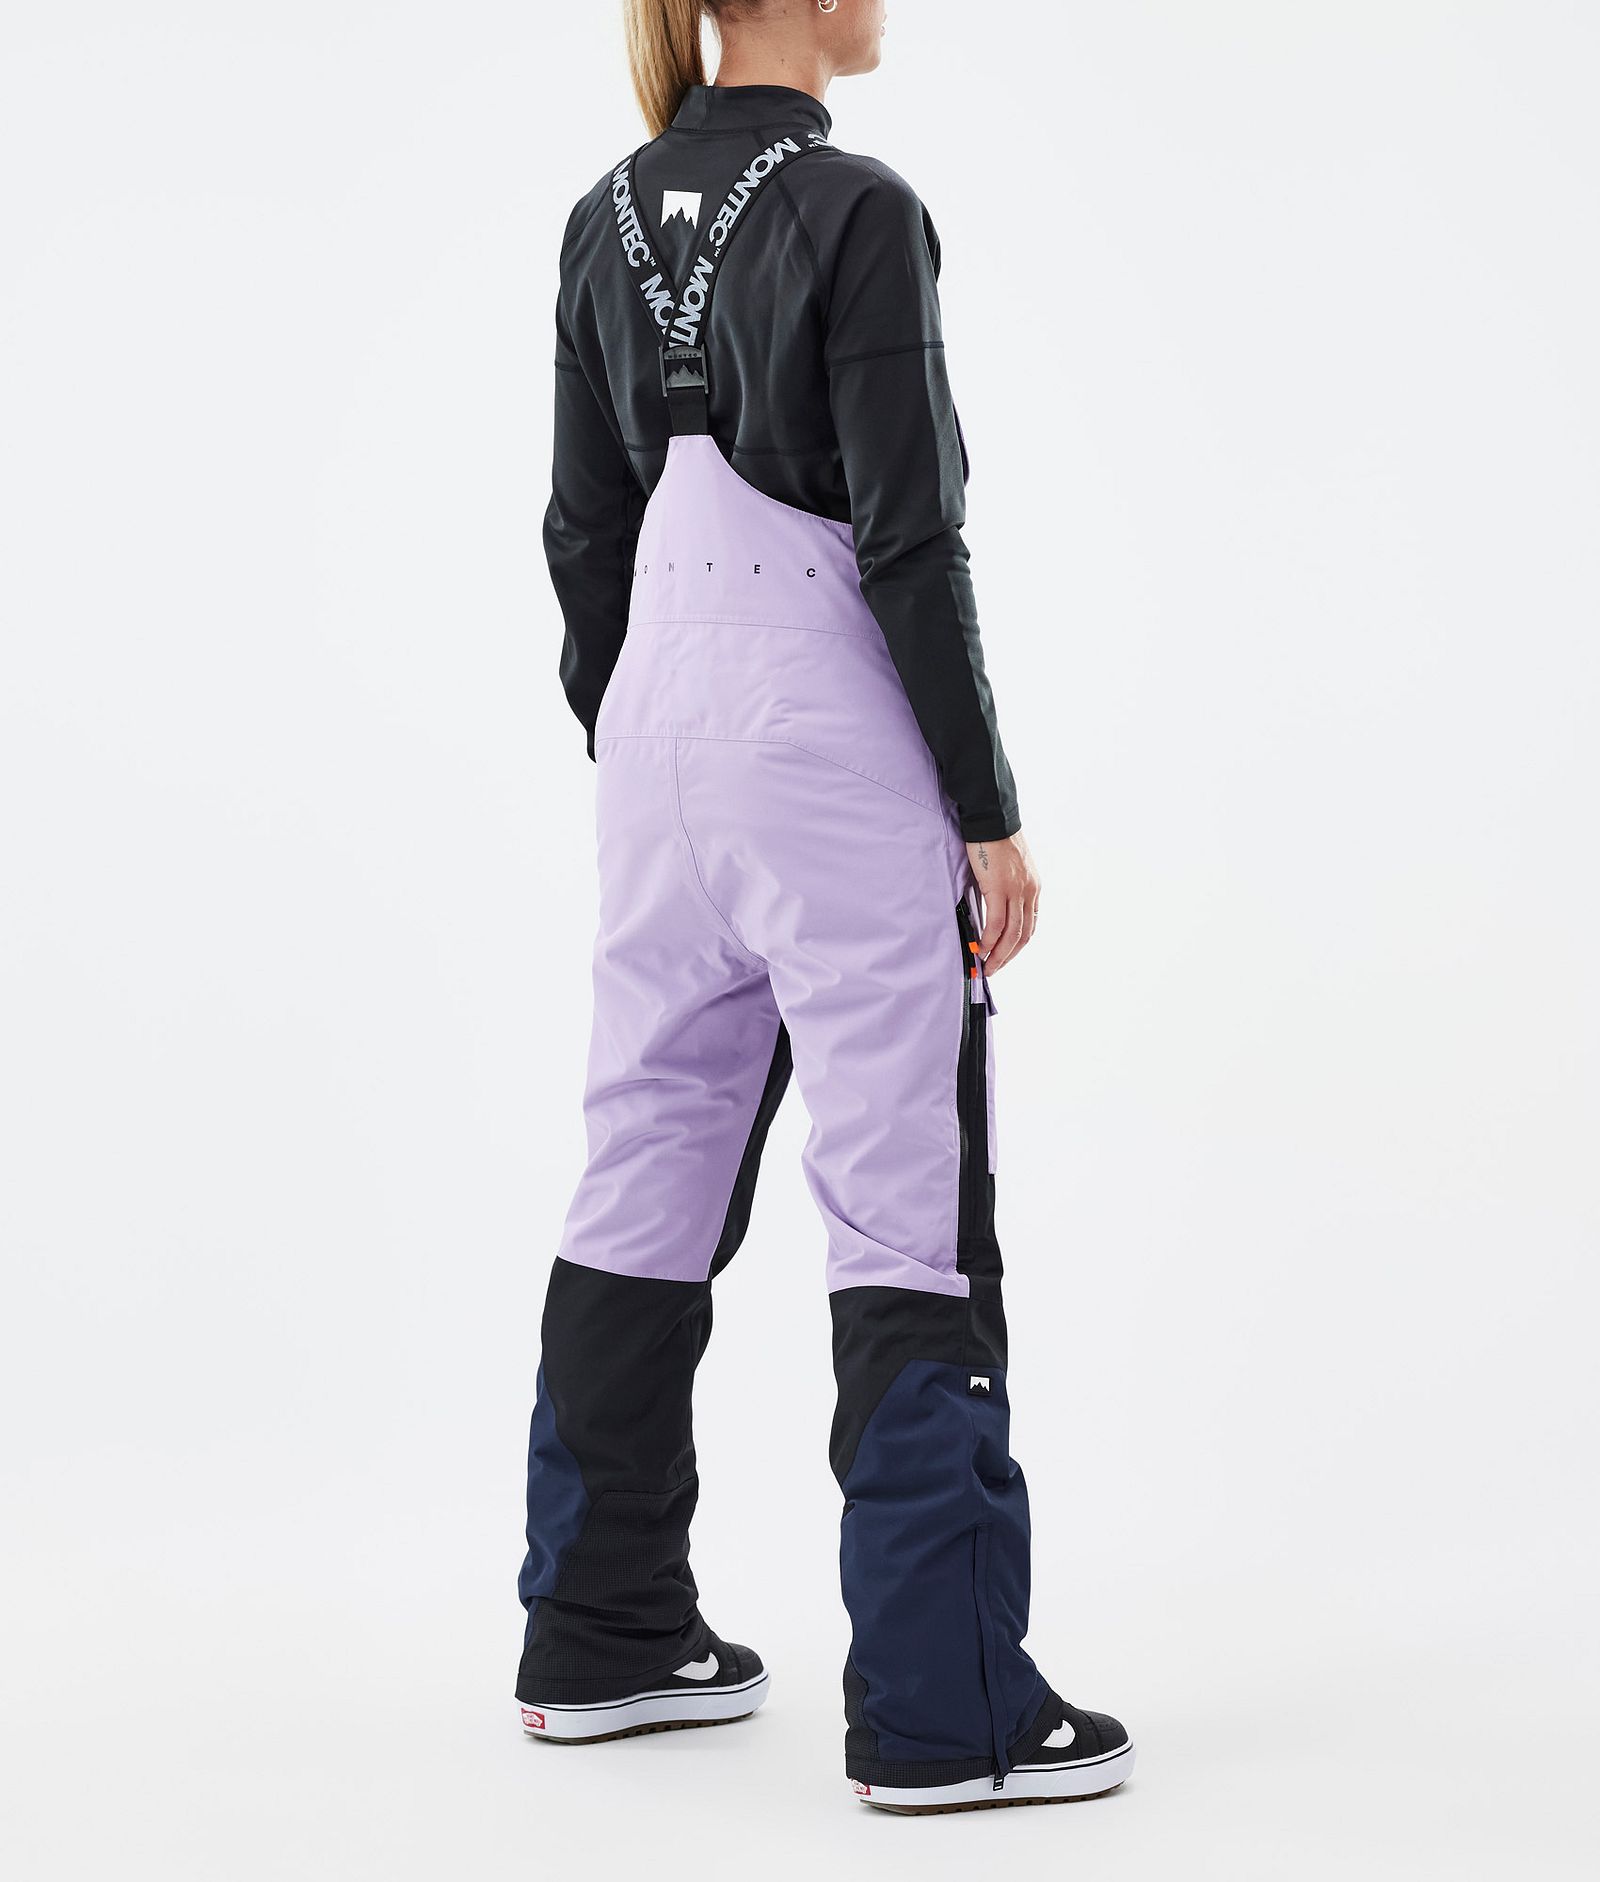 Fawk W Pantaloni Snowboard Donna Faded Violet/Black/Dark Blue